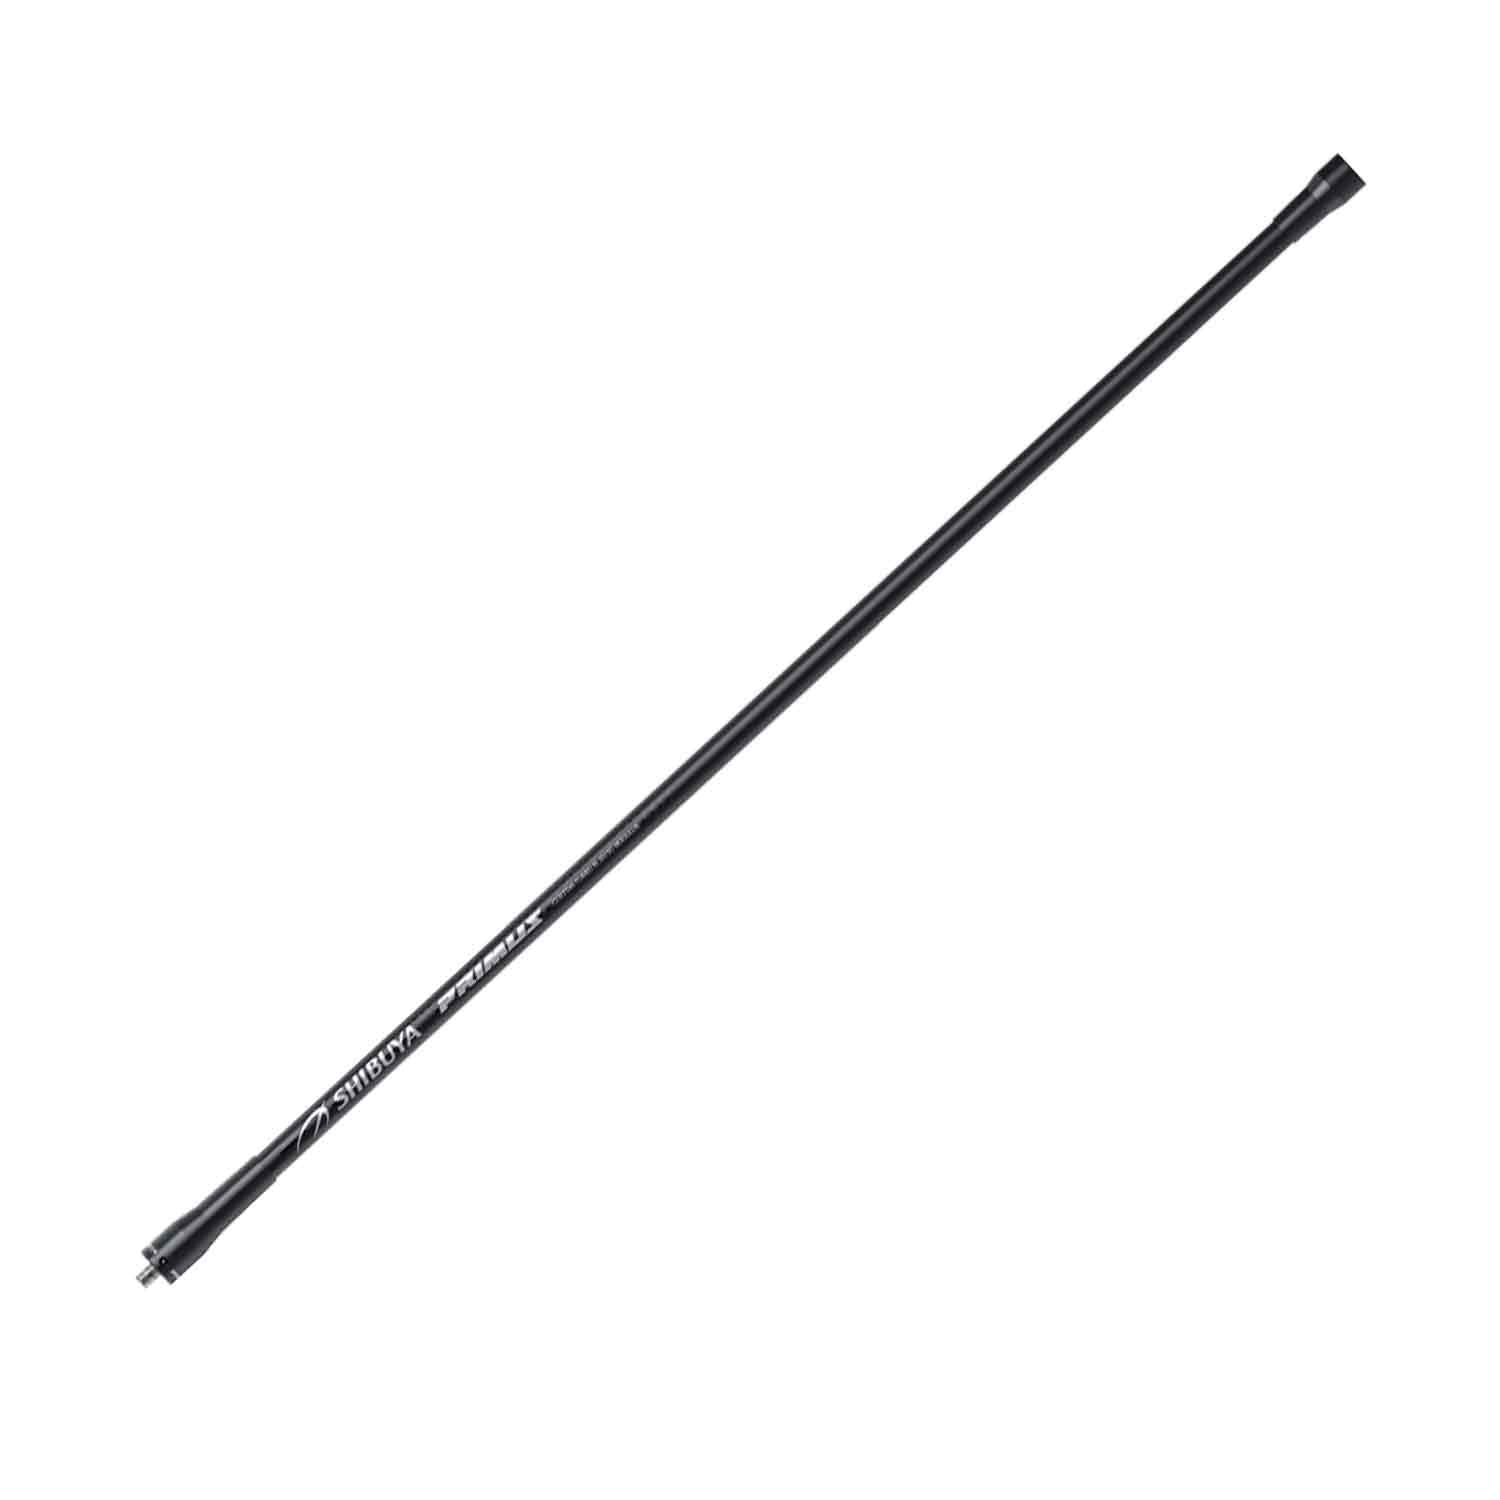 Shibuya Primus Carbon Long Rod Stabilizer